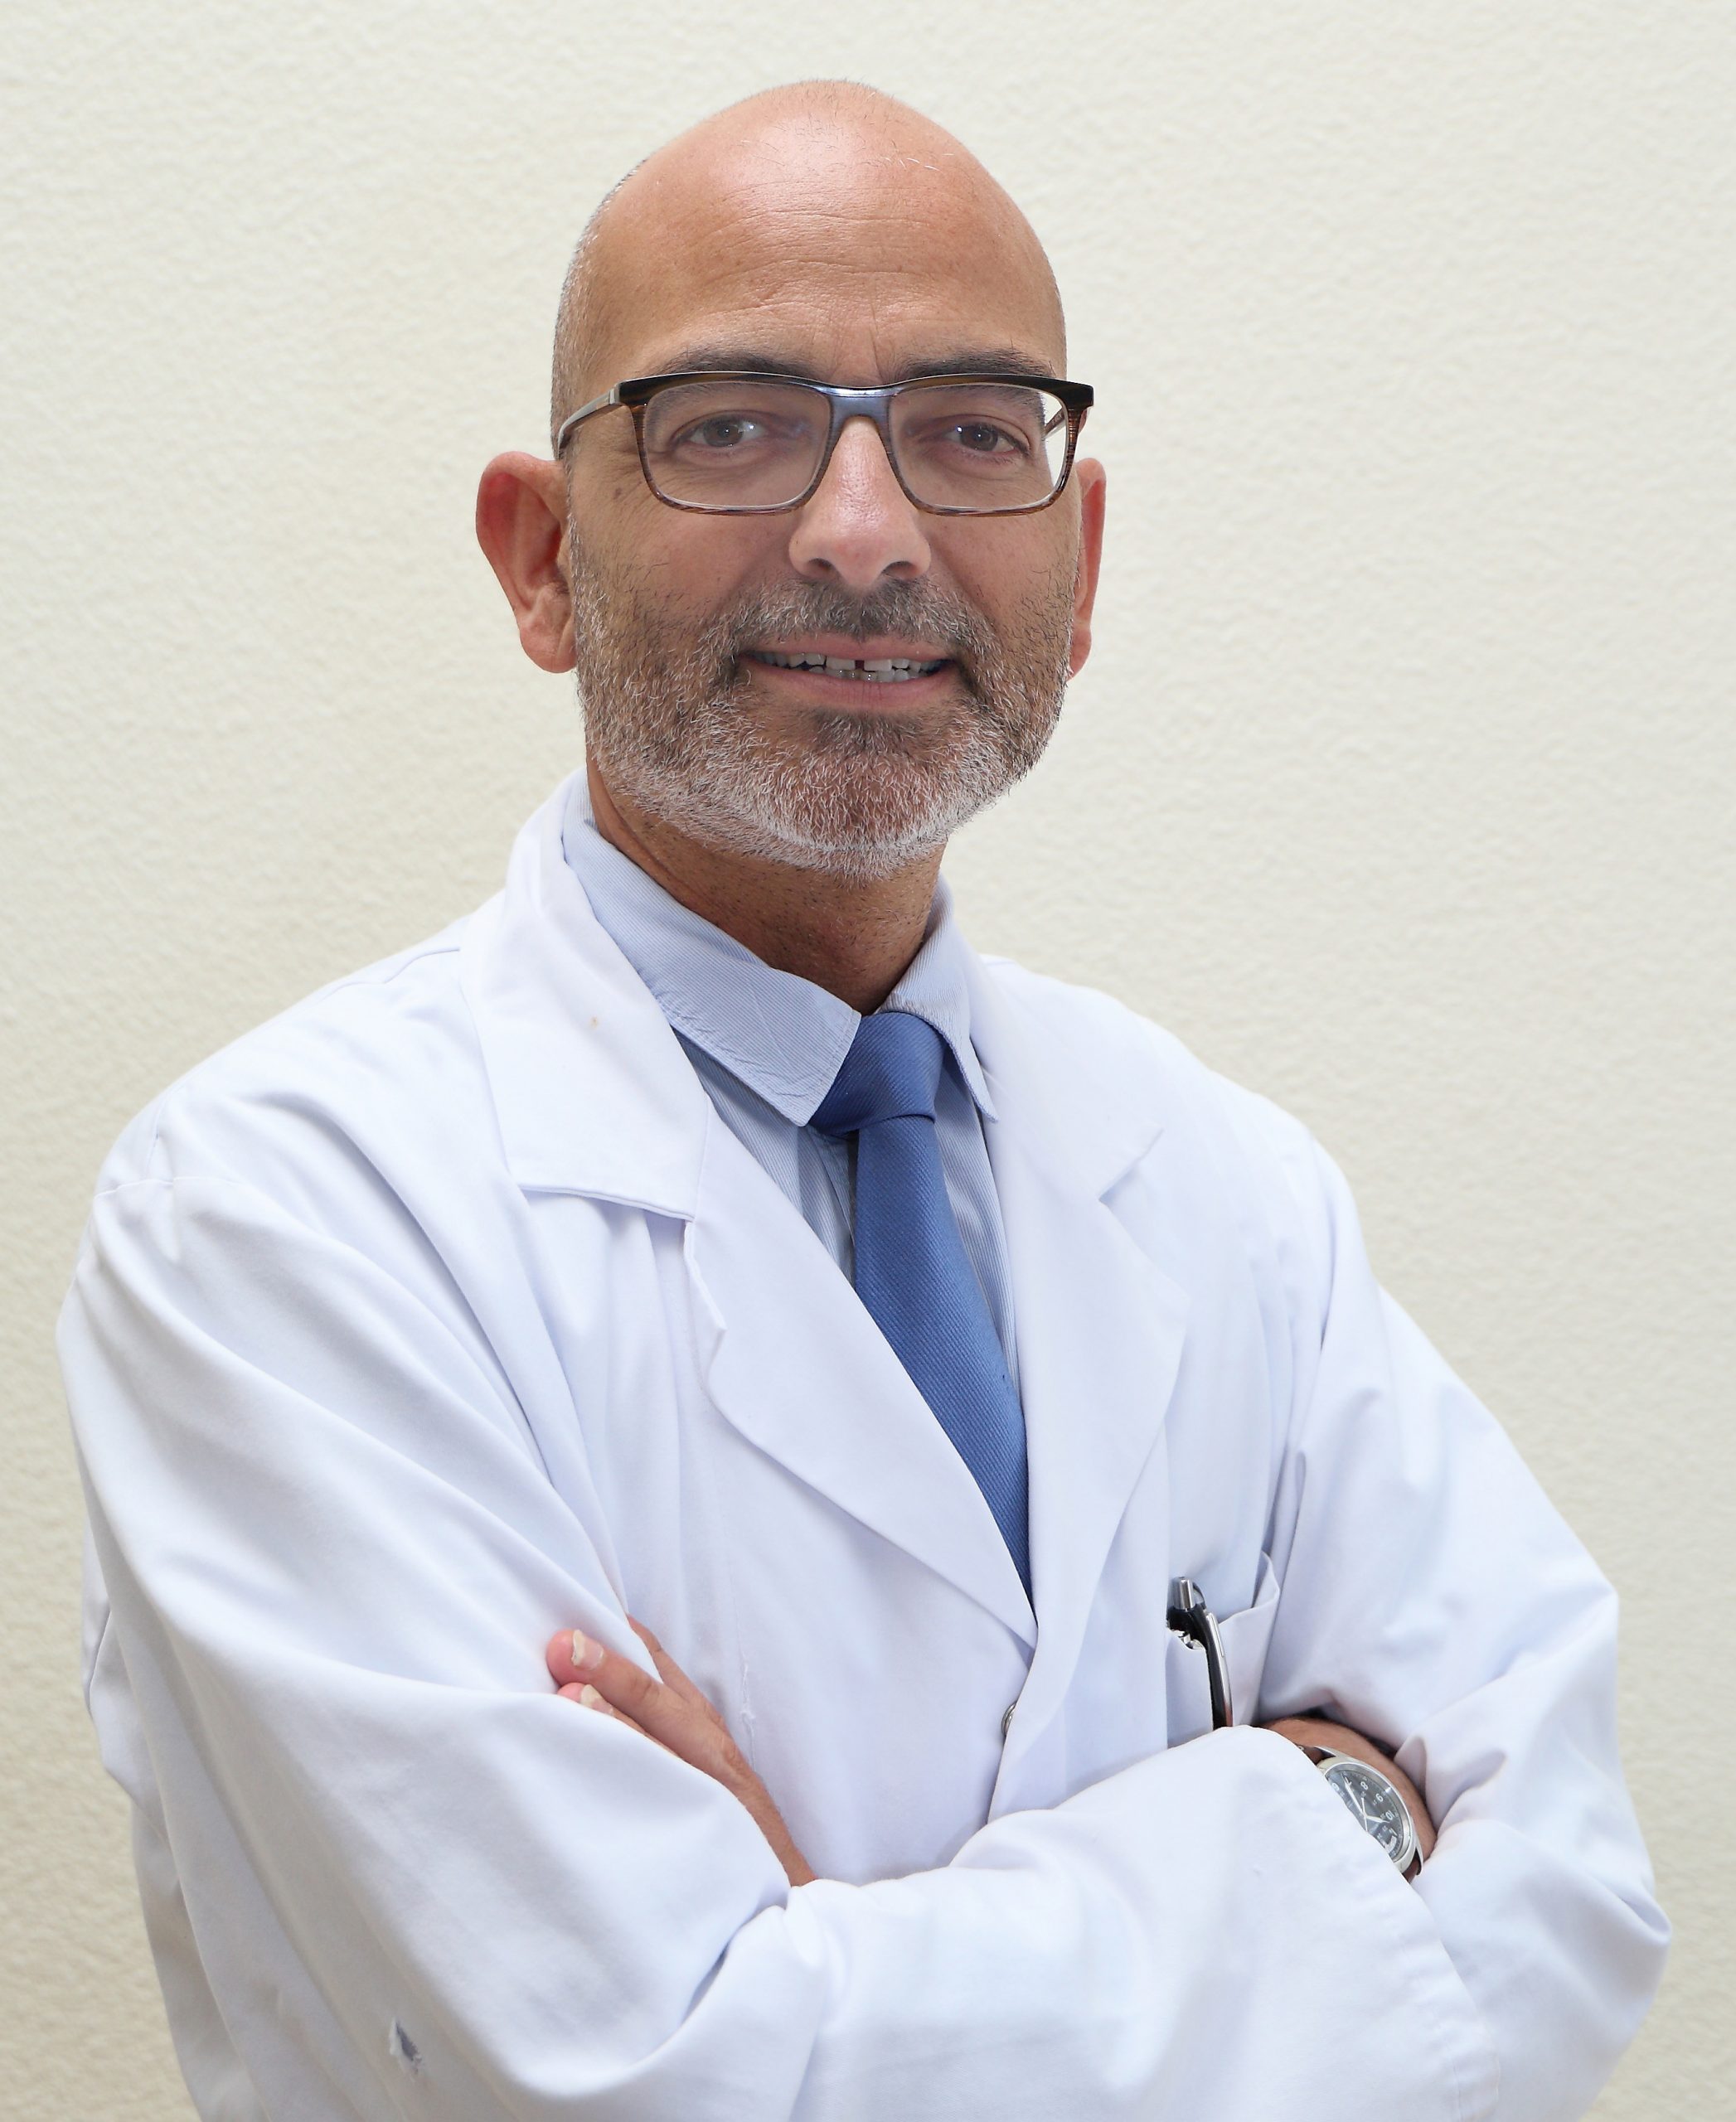 Dr. Oriol ANGERRI. Endourologist - Head of Lithiasis Department at Fundacio Puigvert in Barcelona, Spain.